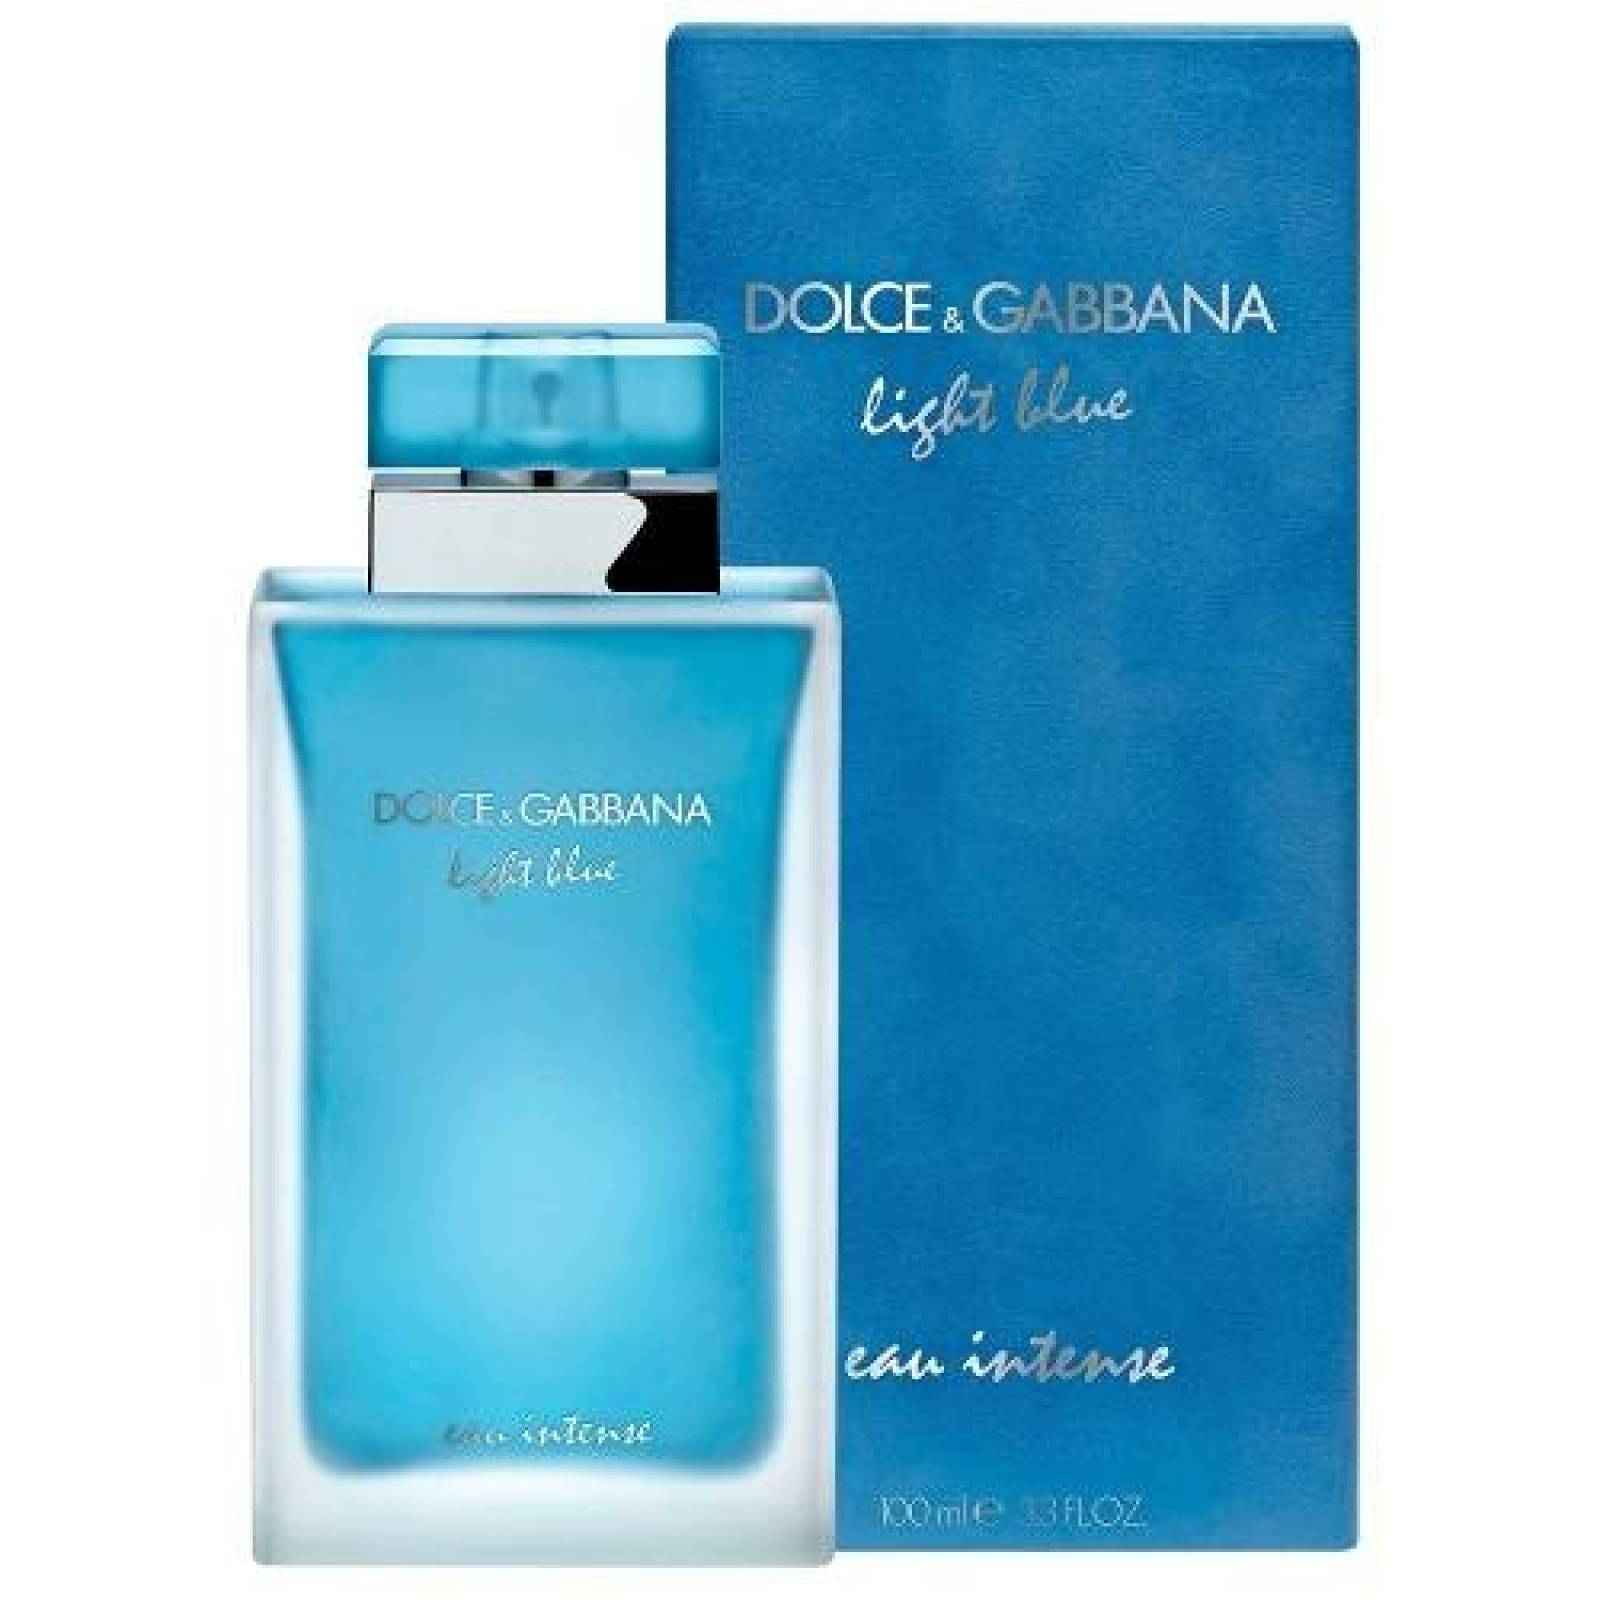 dolce and gabanna light blue 40 ml